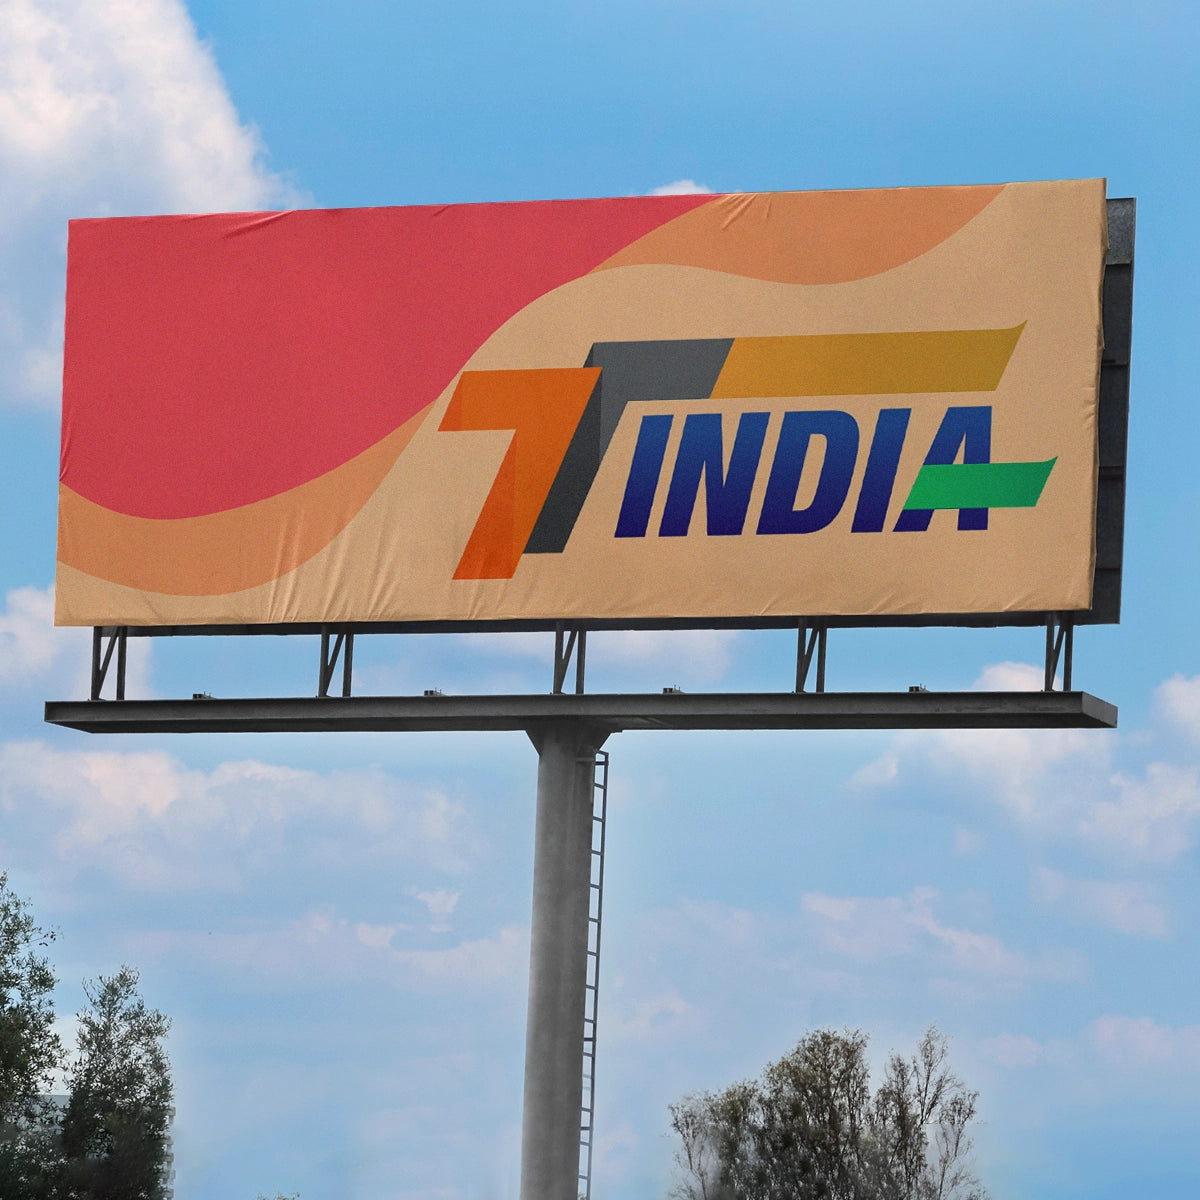 t-india.com